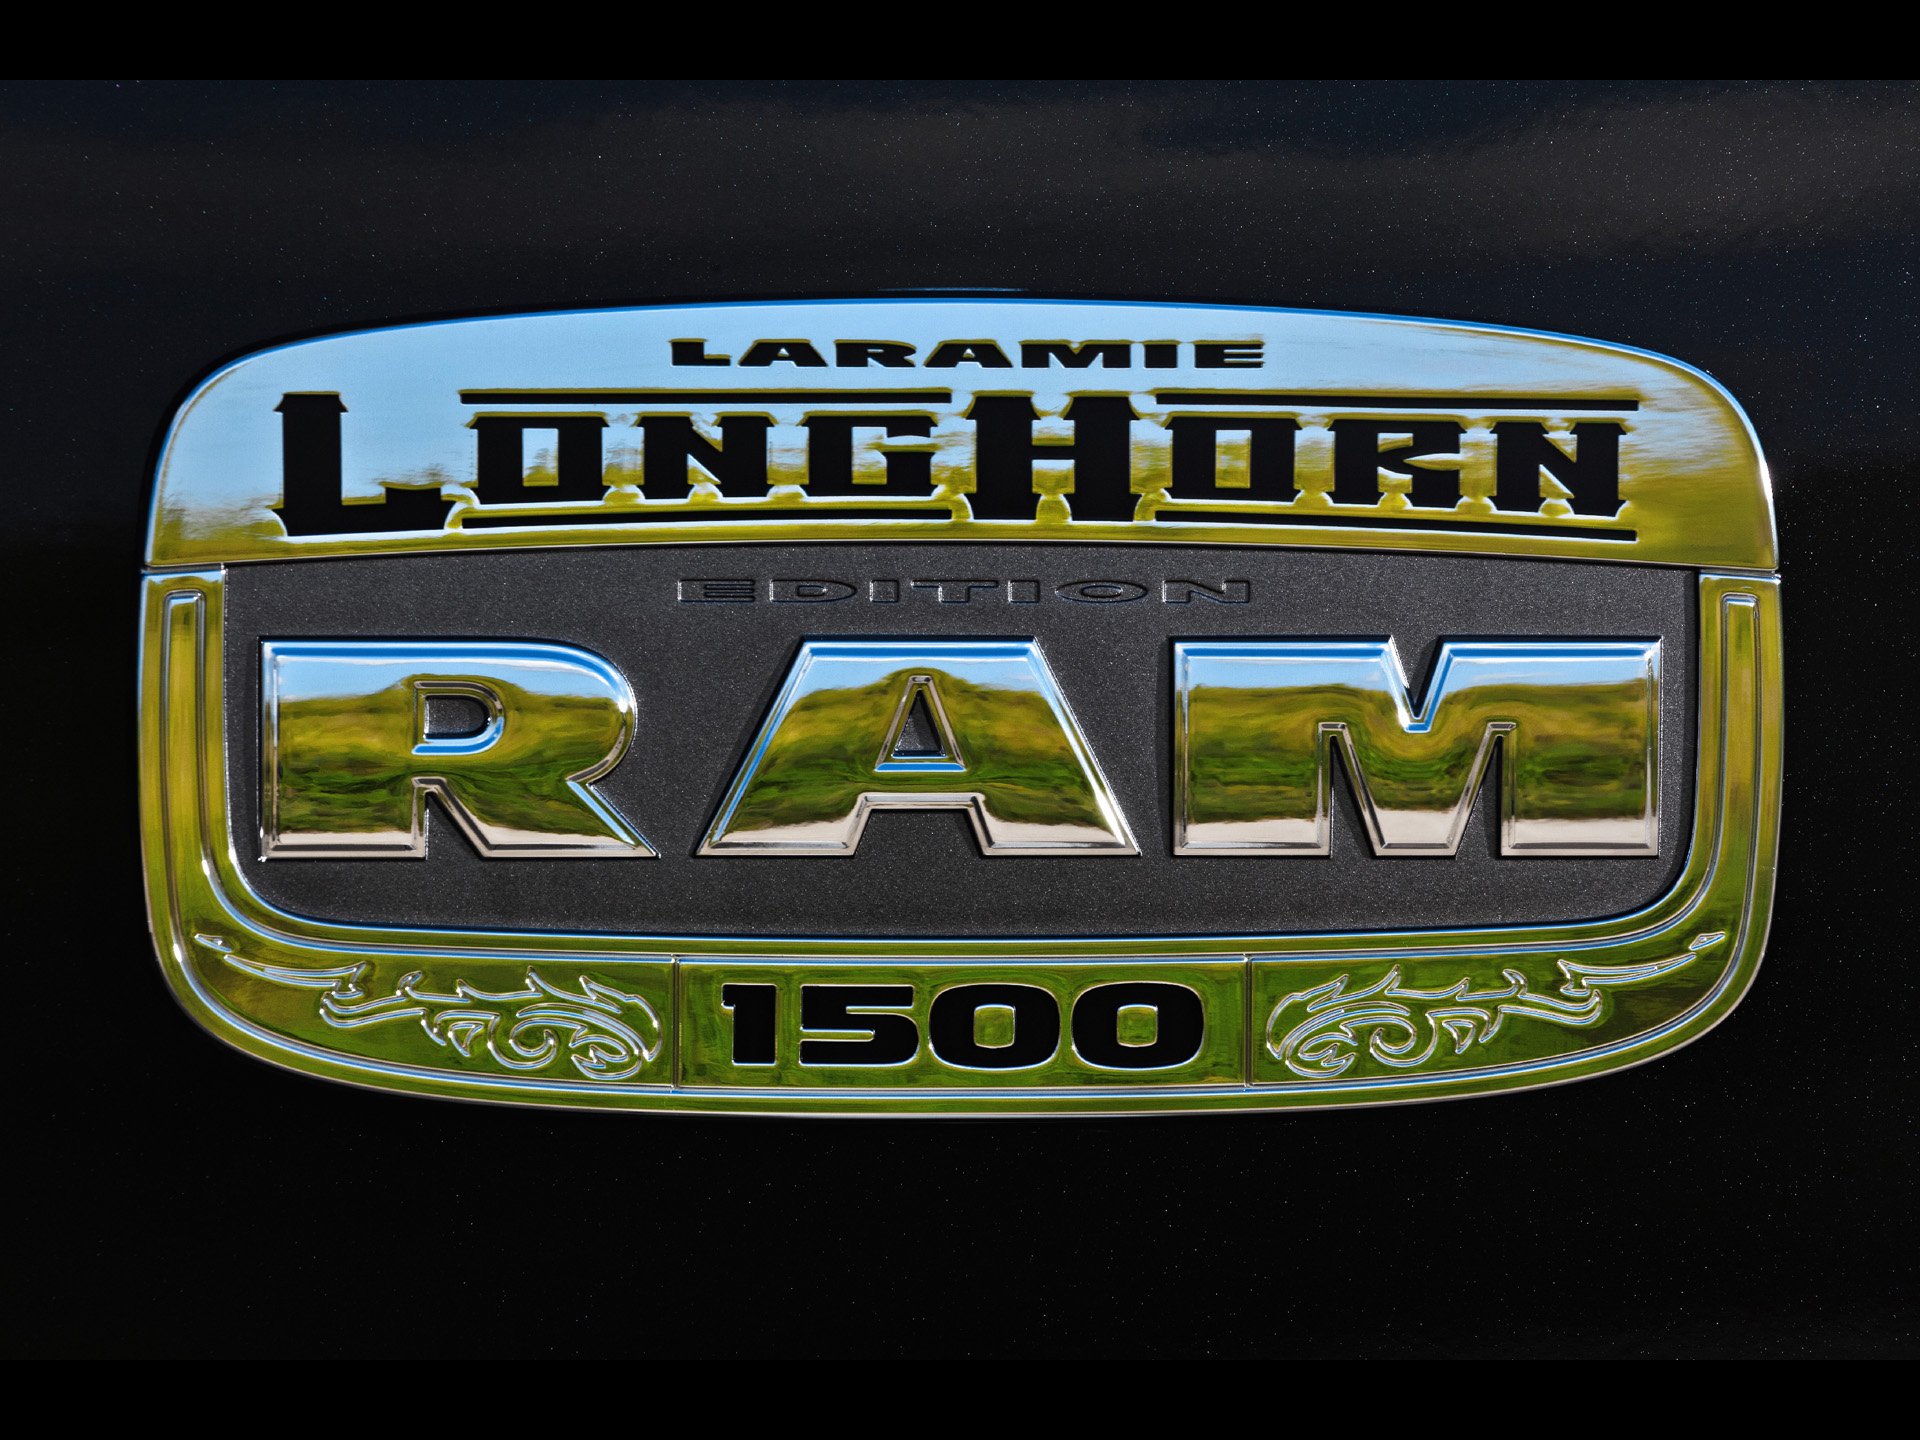 2011 Ram Laramie Longhorn pickup truck 1500 logo reflection wallpaper